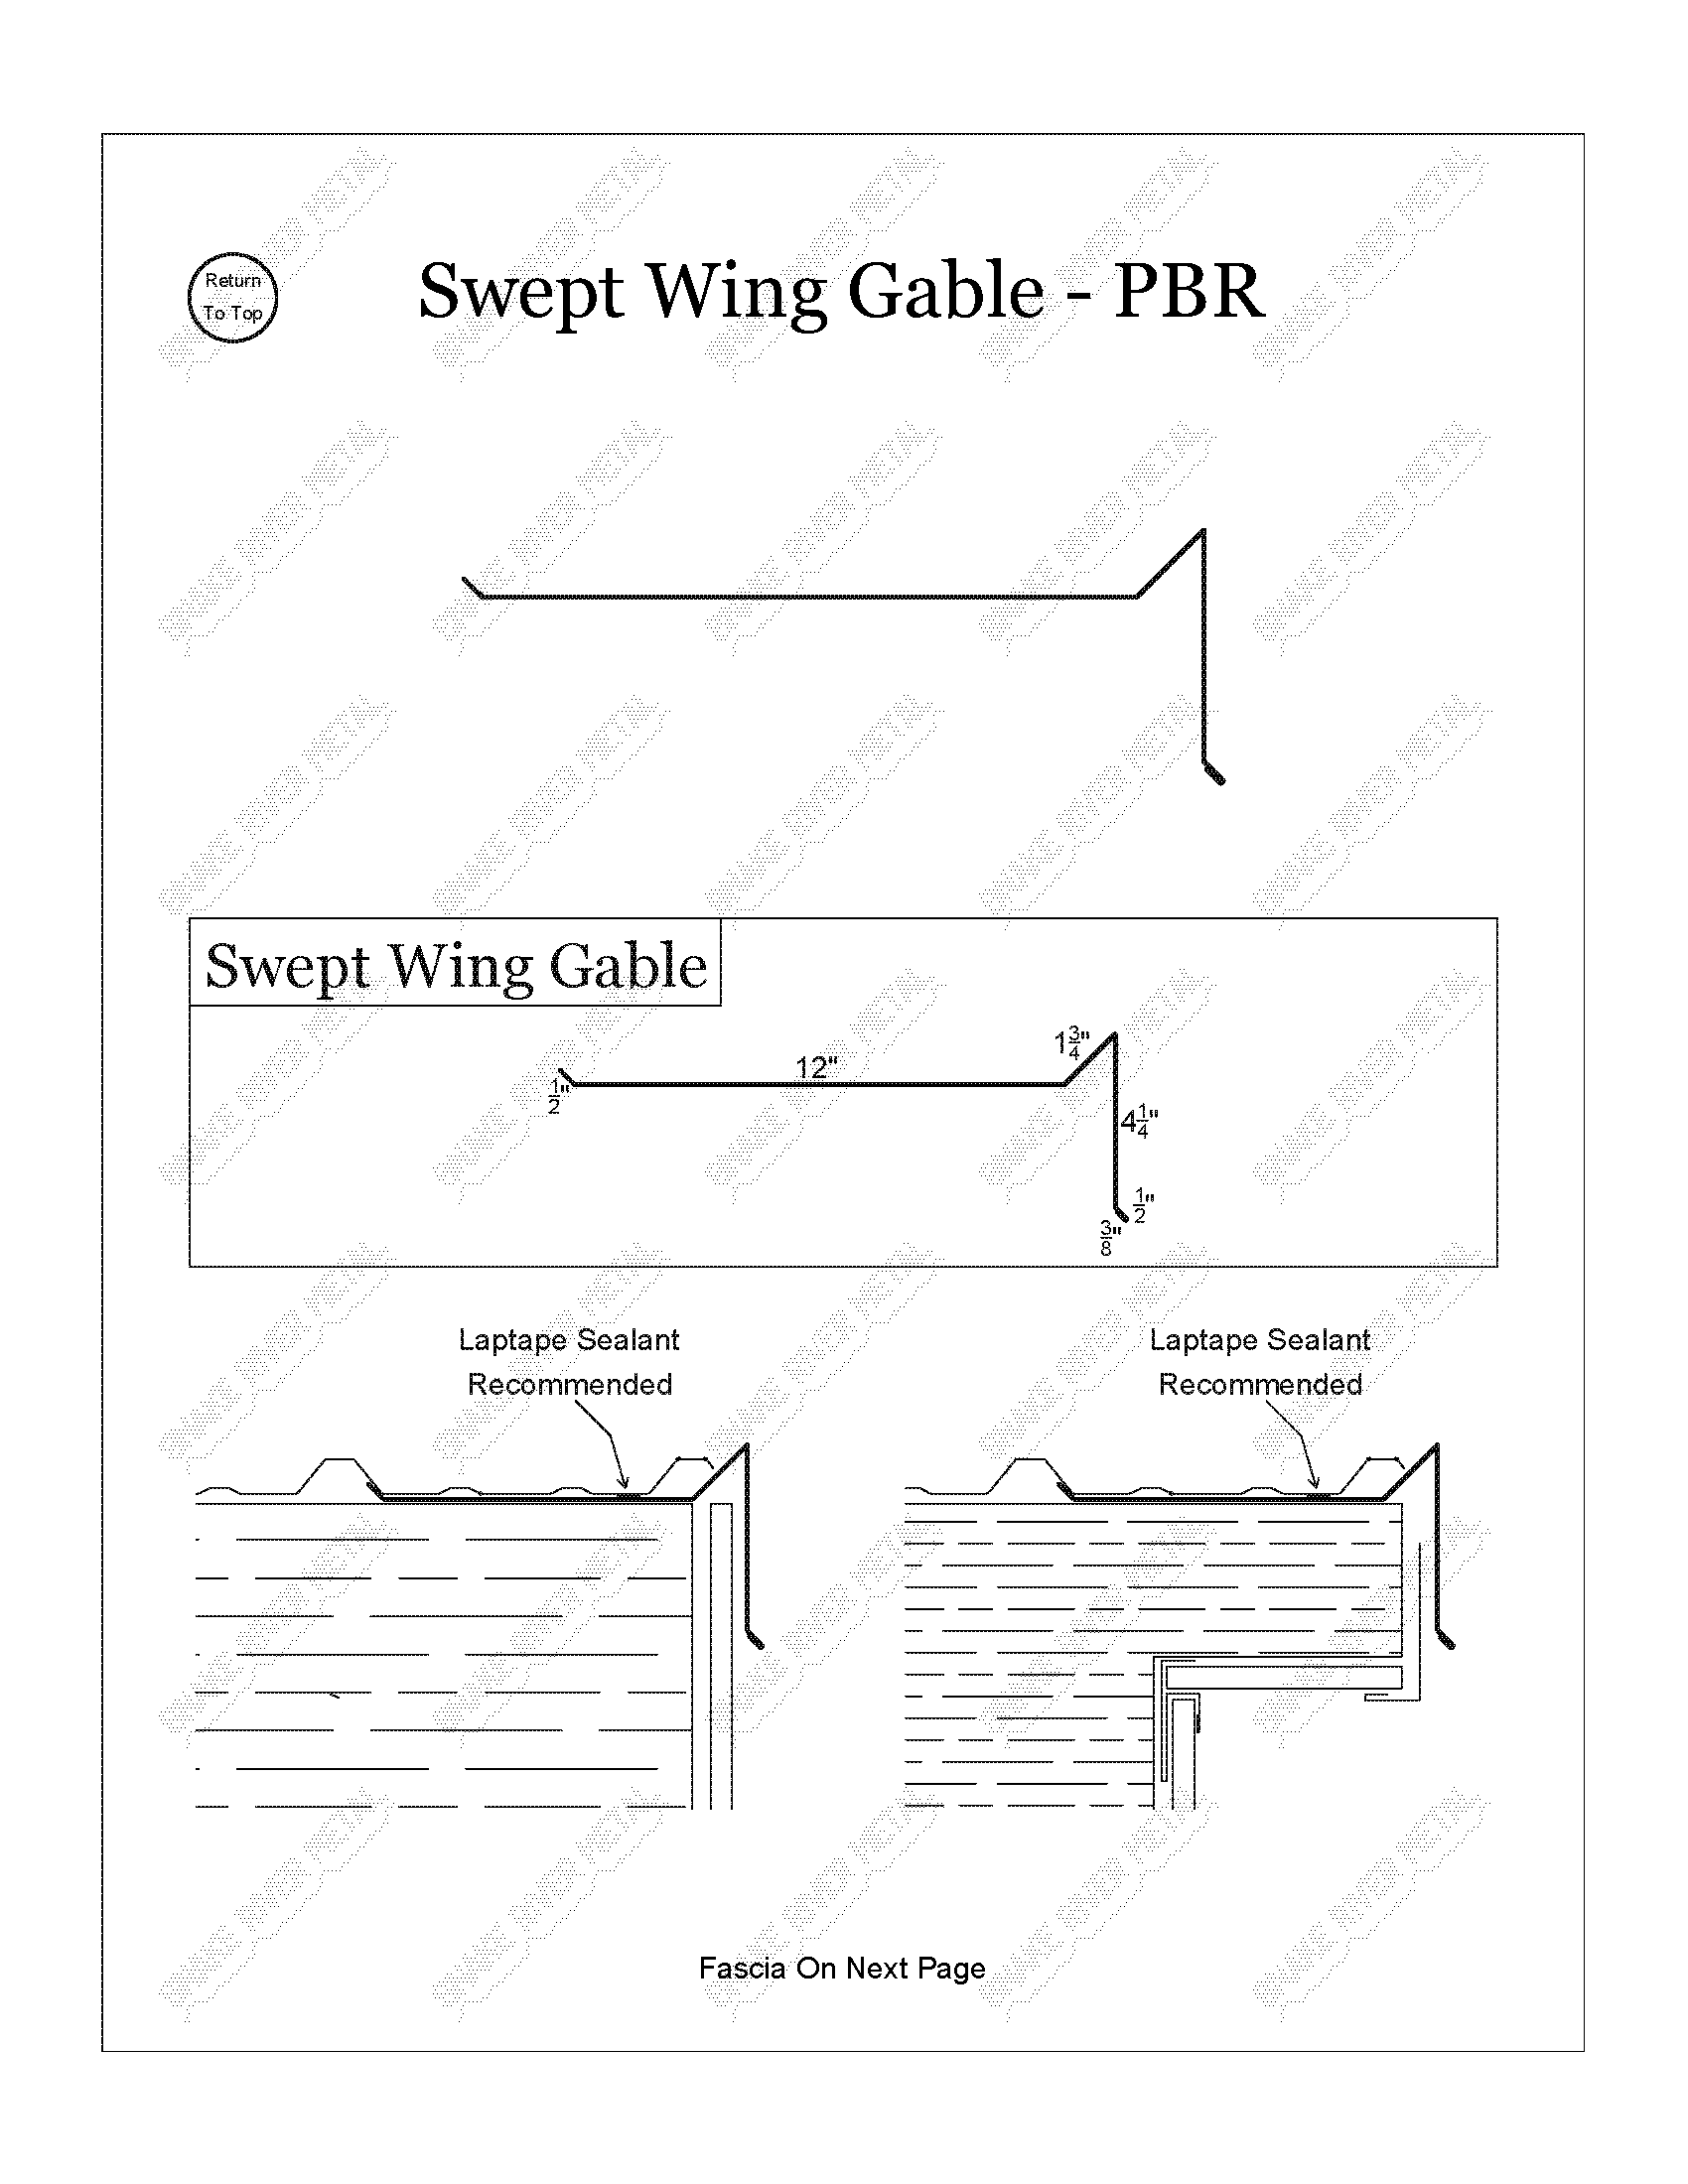 Swept Wing Gable - PBR Trim